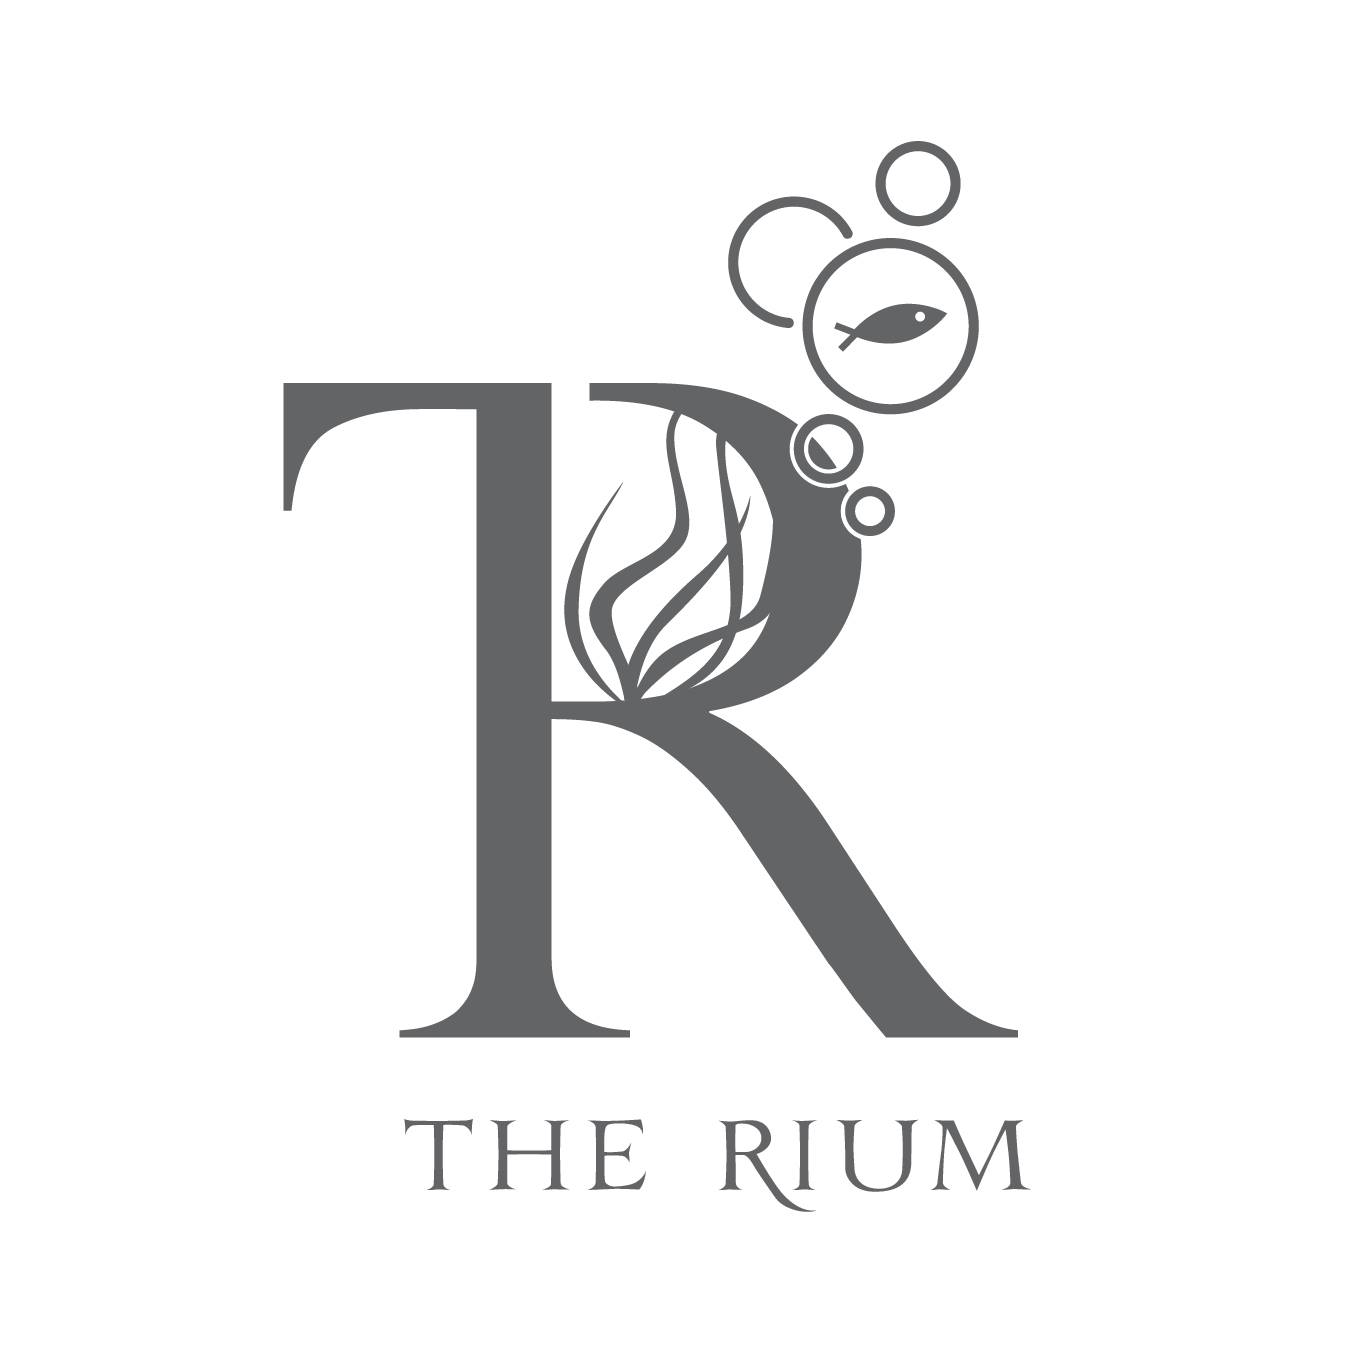 Cửa hàng The Rium